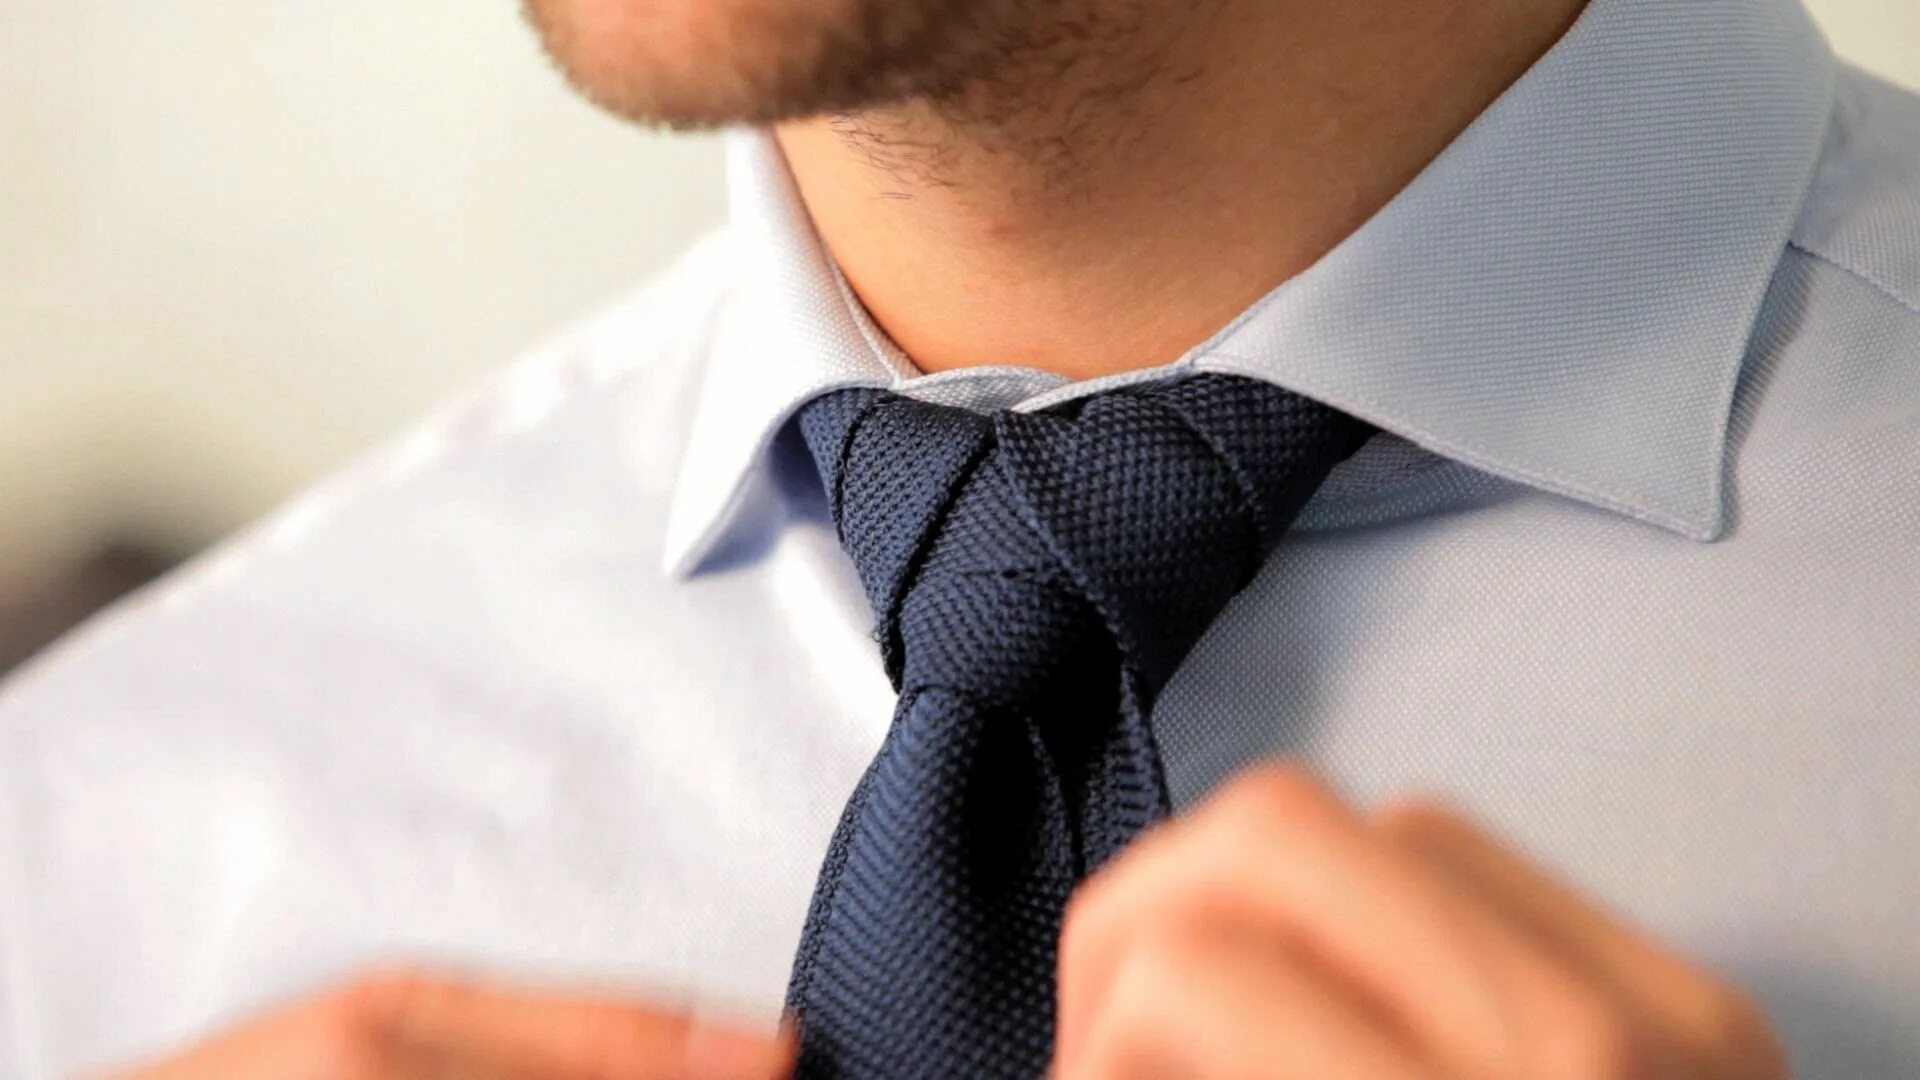 Галстук. Завязанный галстук мужской. Мужчина завязывает галстук. Узлы для галстуков. Завязывание мужского галстука